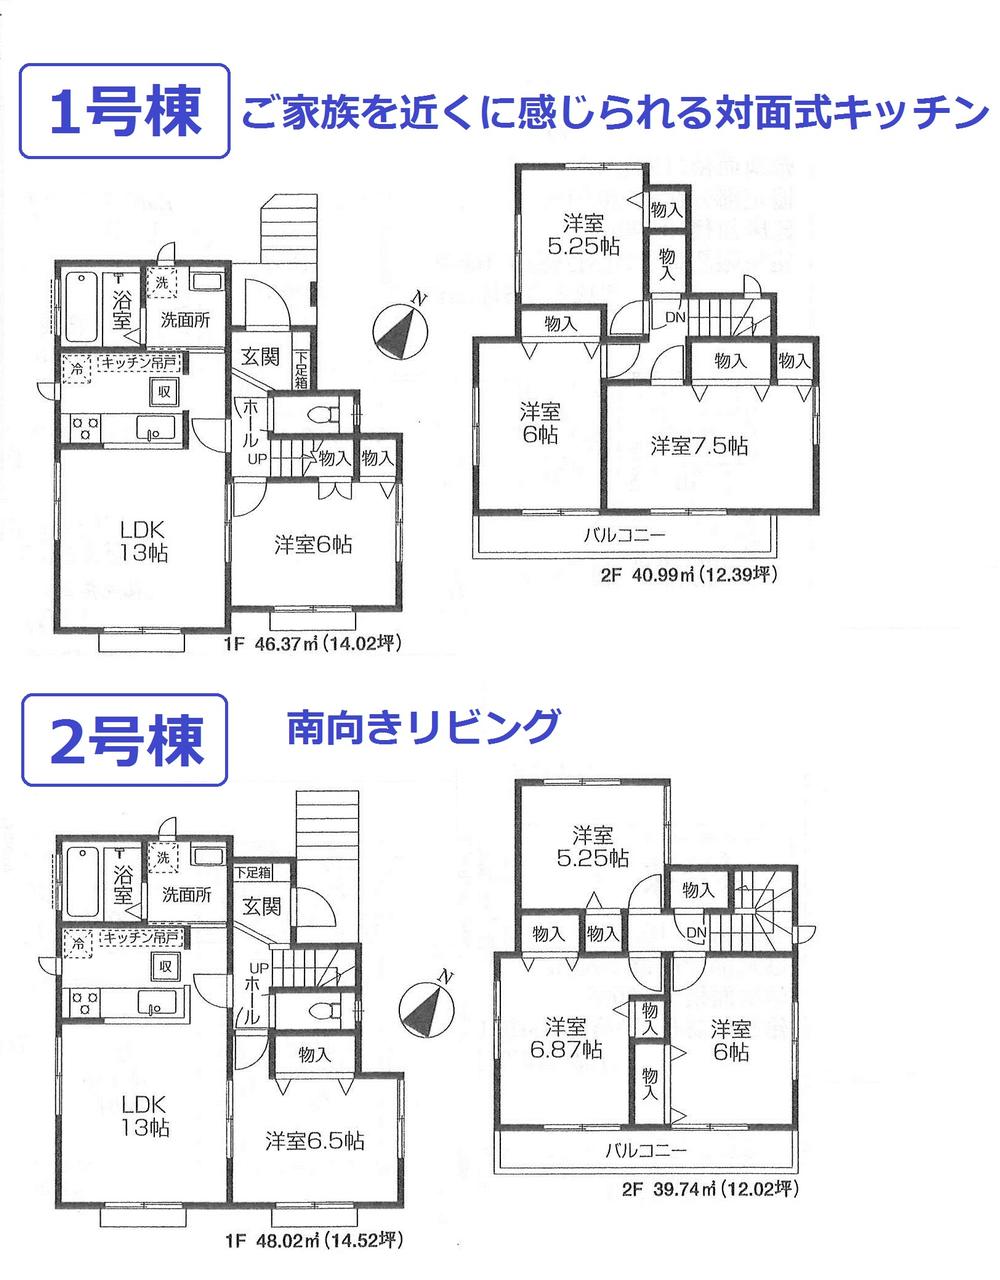 Floor plan. (1 Building), Price 22,800,000 yen, 4LDK, Land area 109.6 sq m , Building area 87.36 sq m